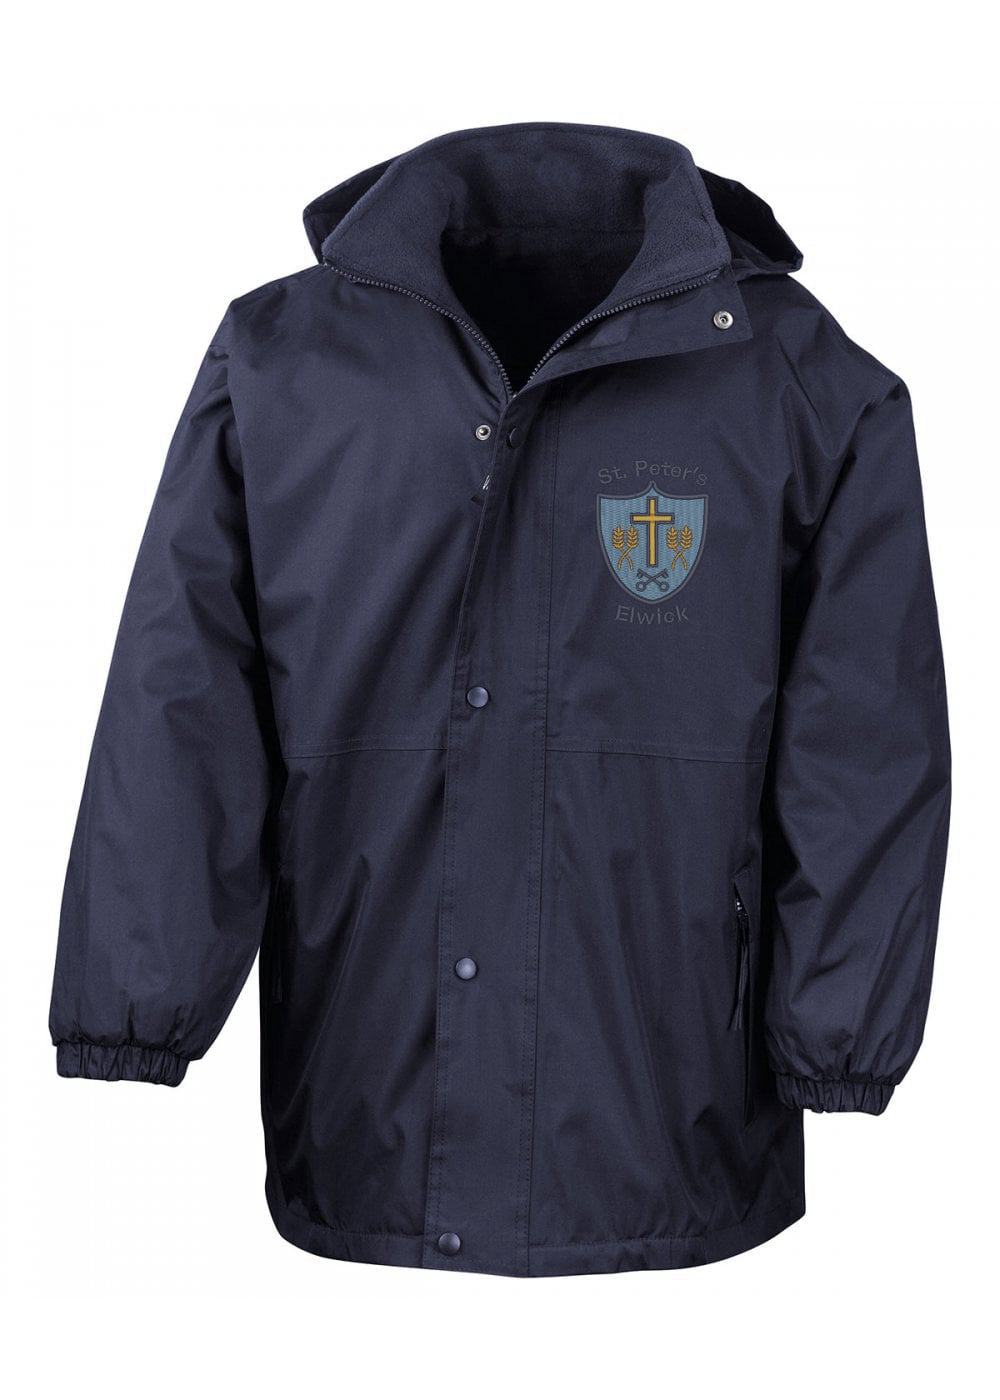 St. Peter's Elwick Navy Winter Storm Jacket